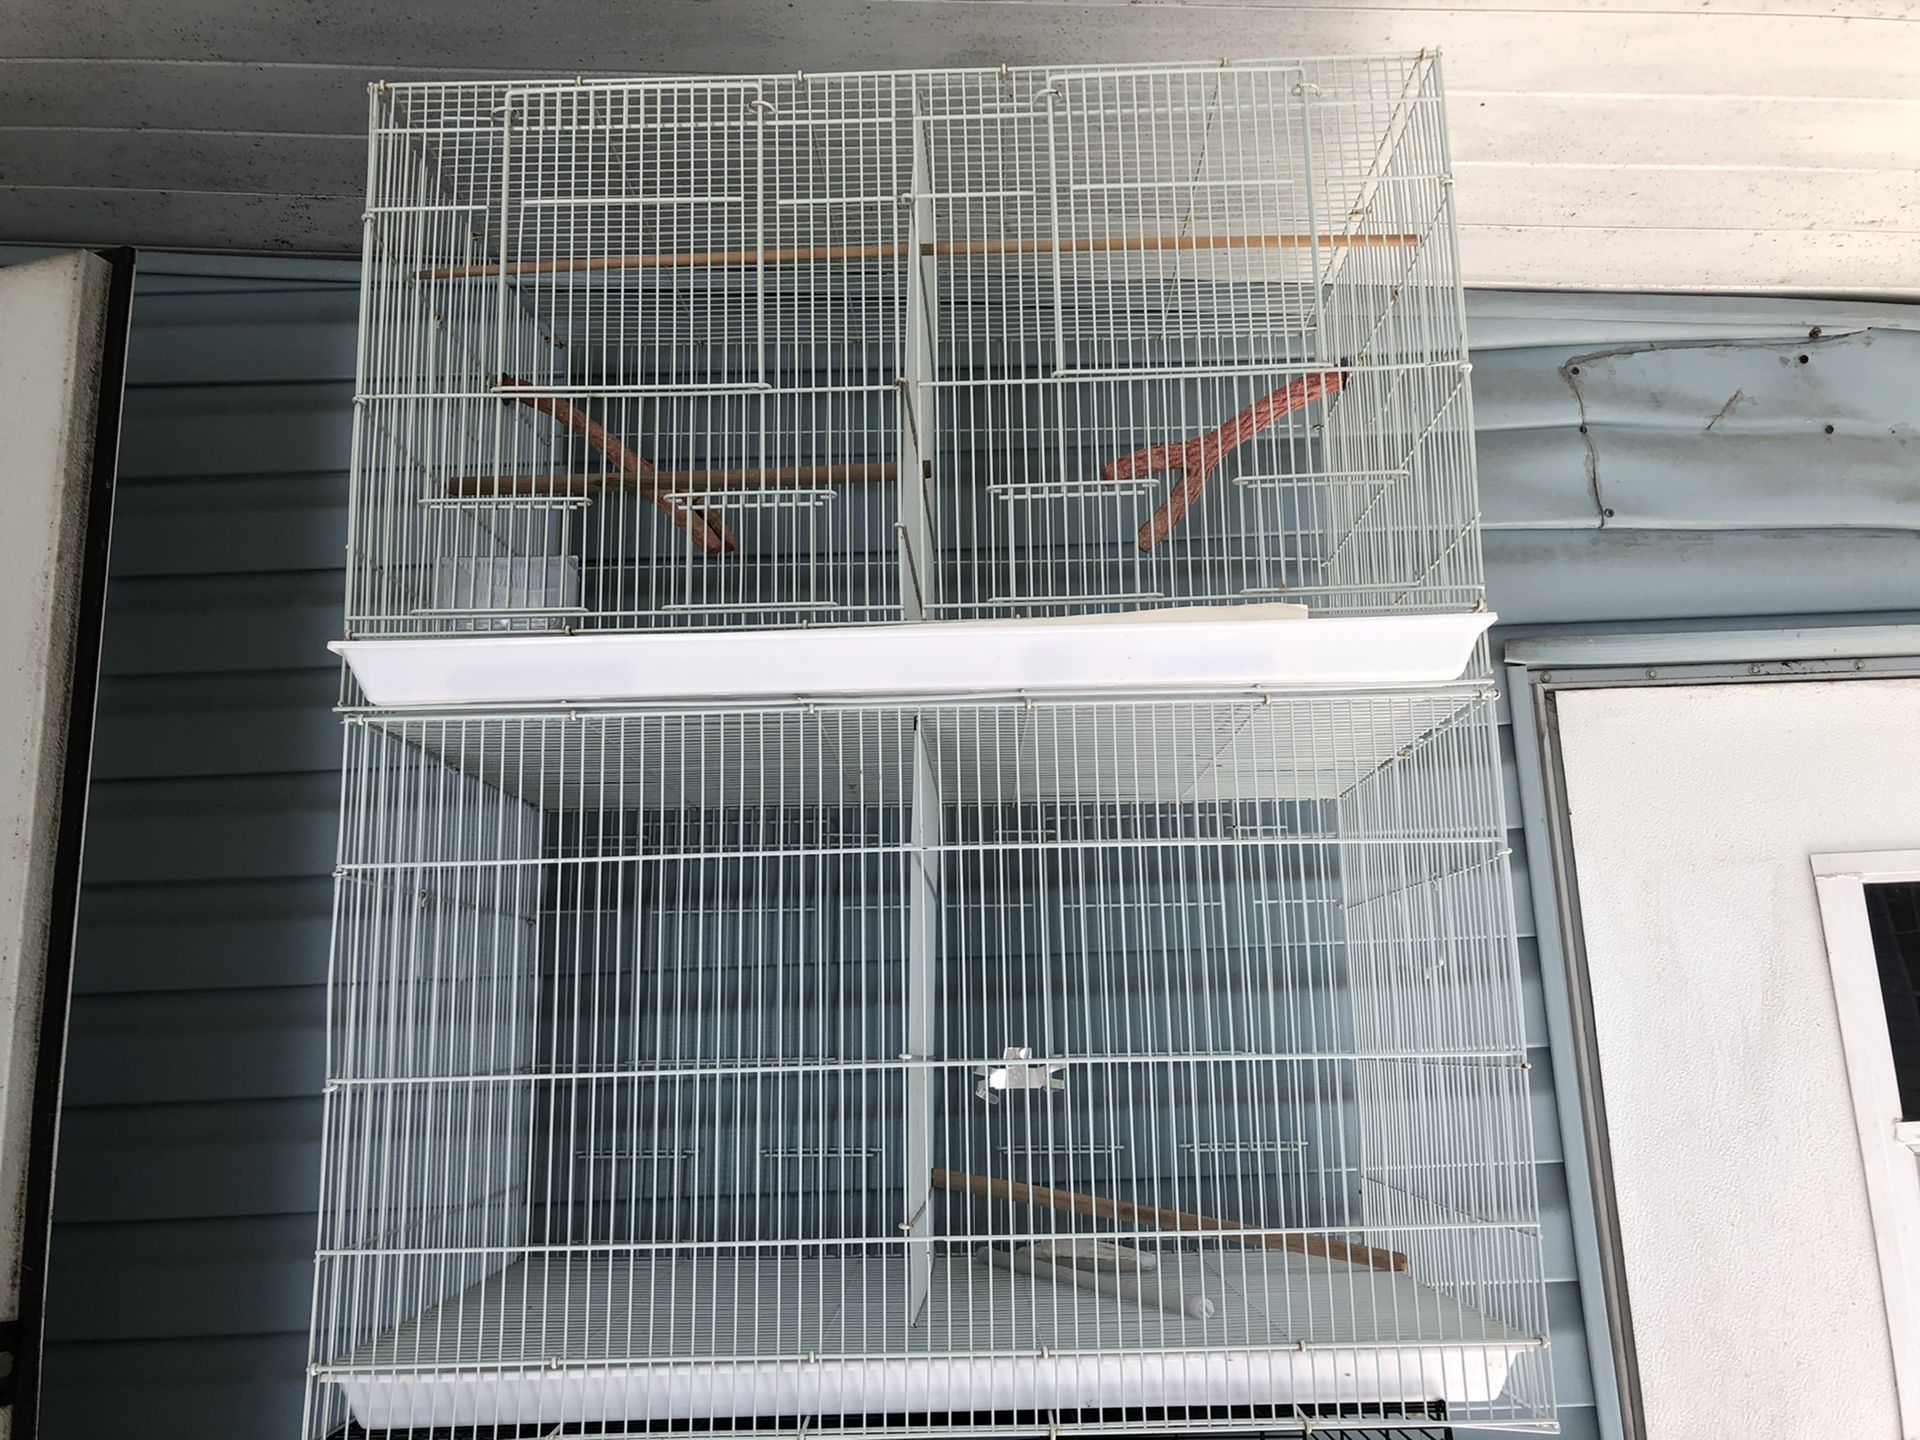 Breeding bird cage